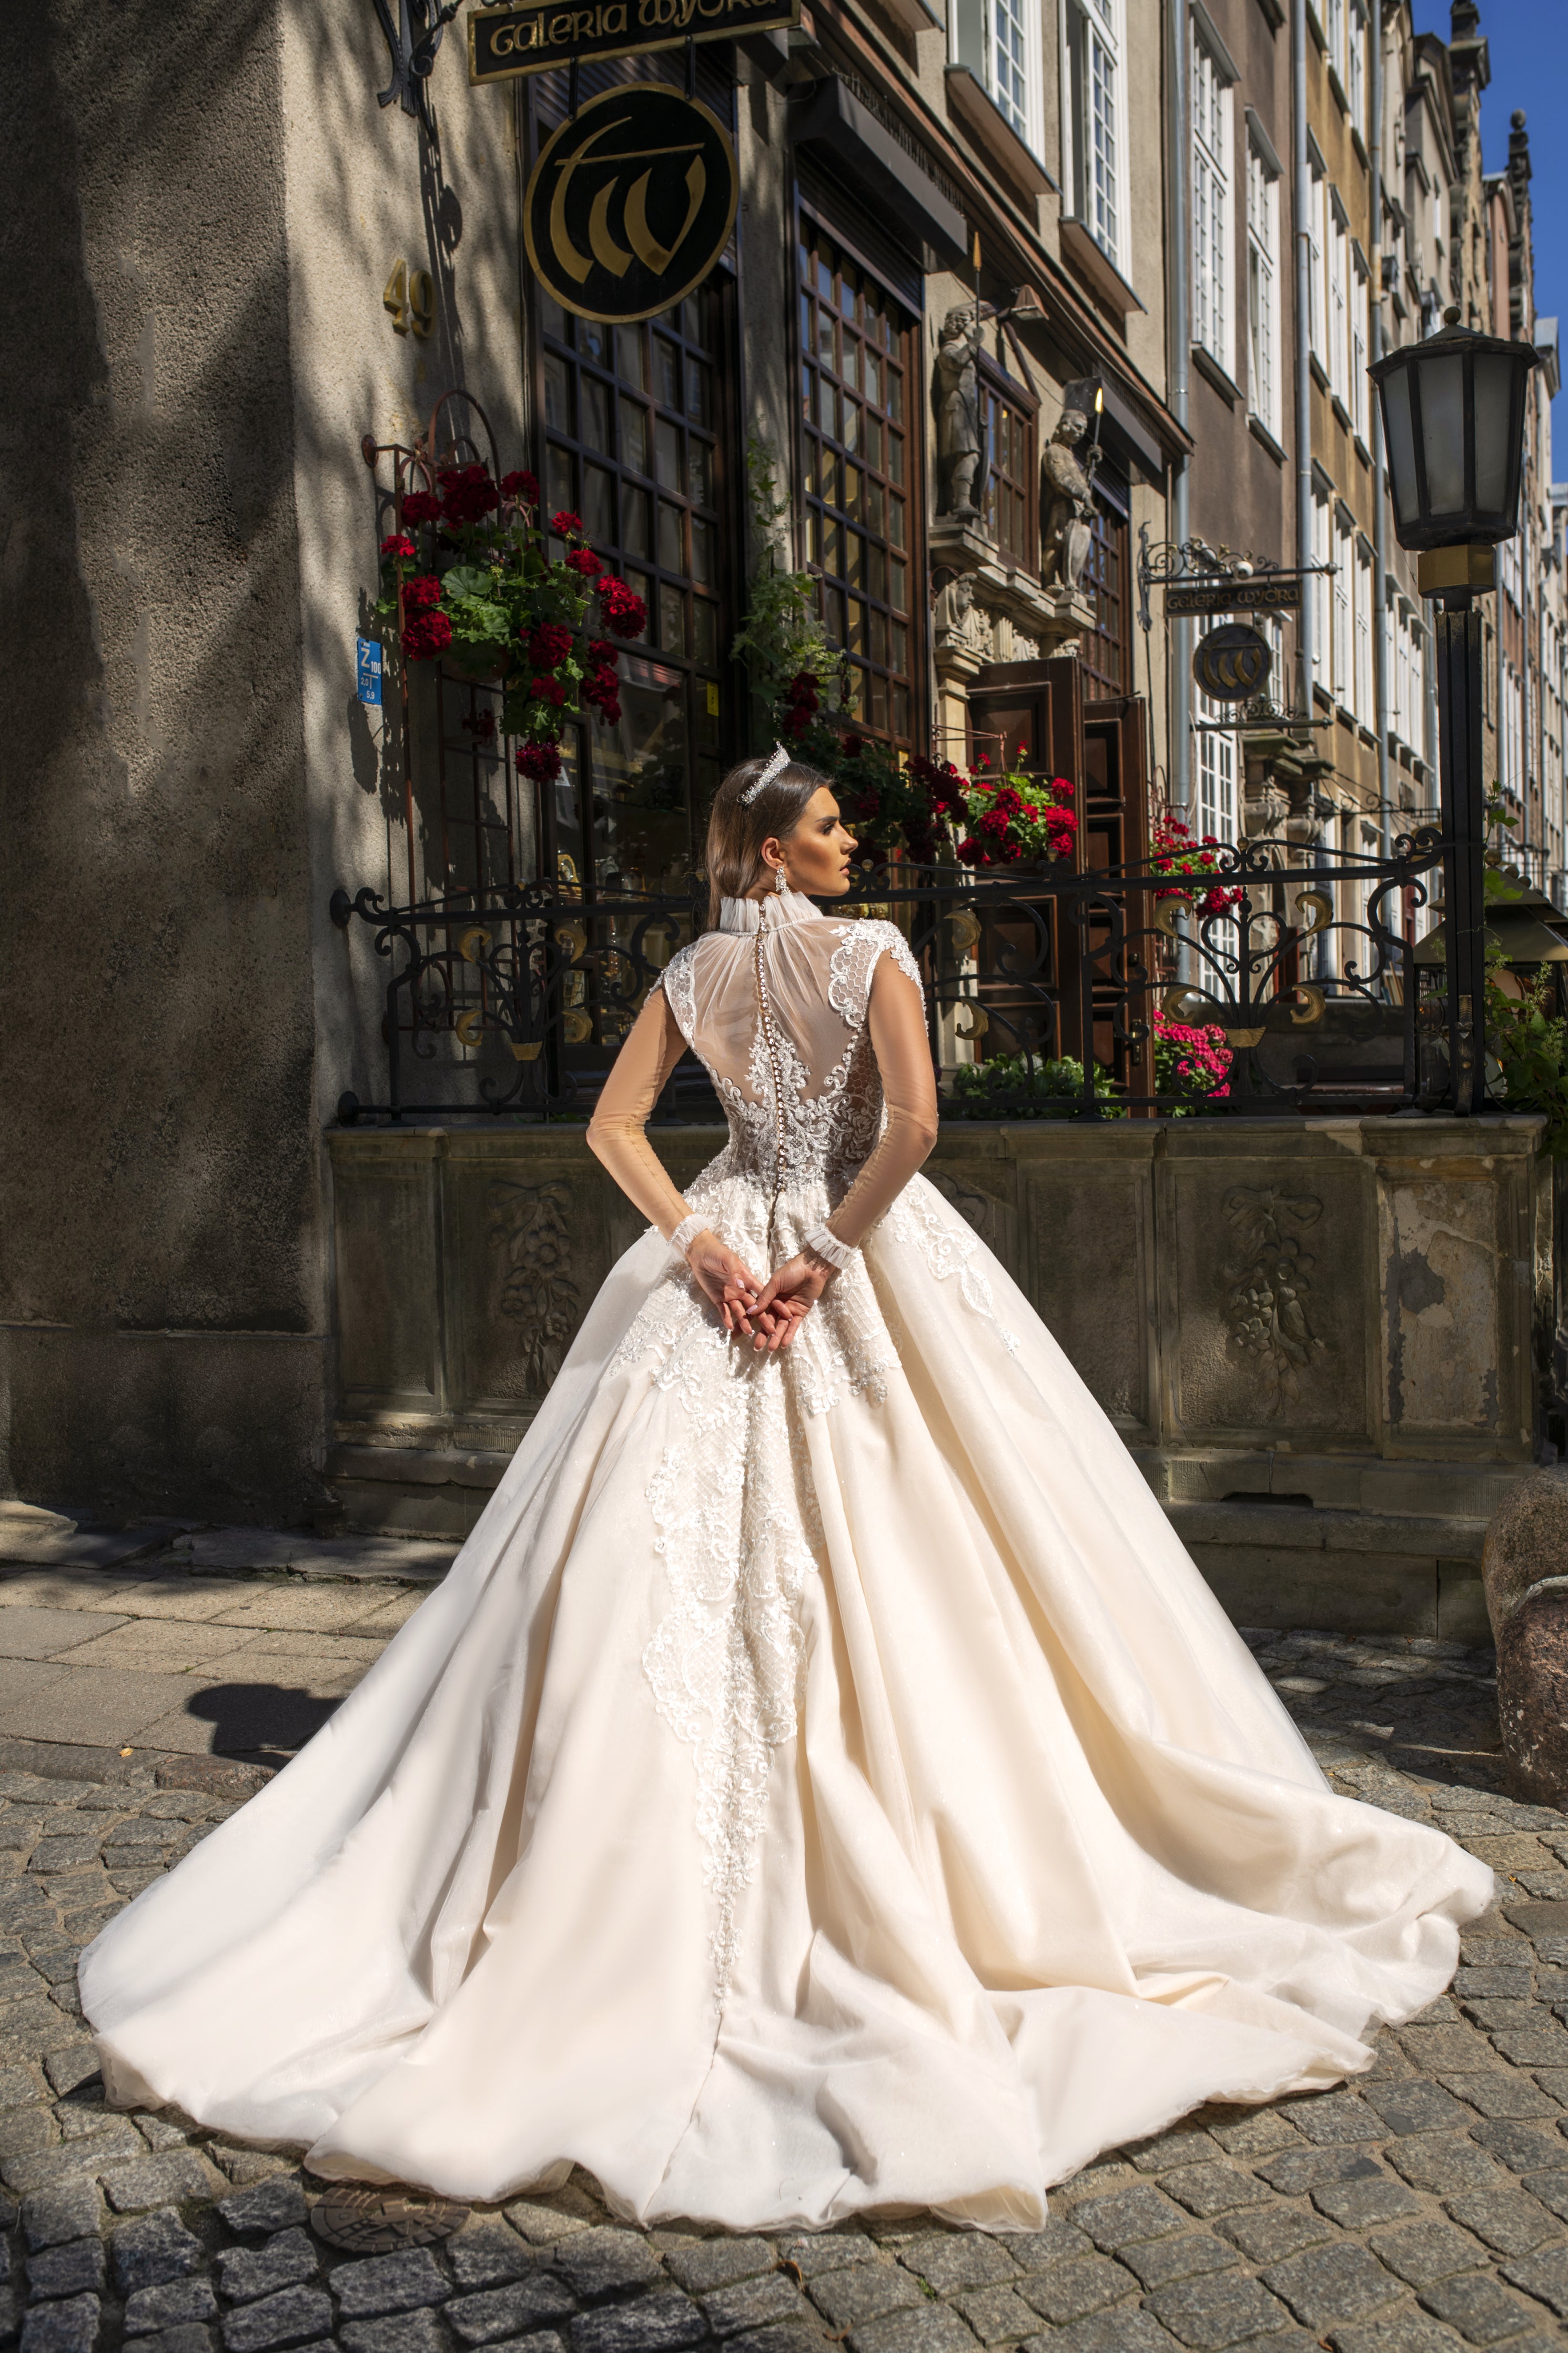 Princess Ballgown Wedding Dress -  Canada